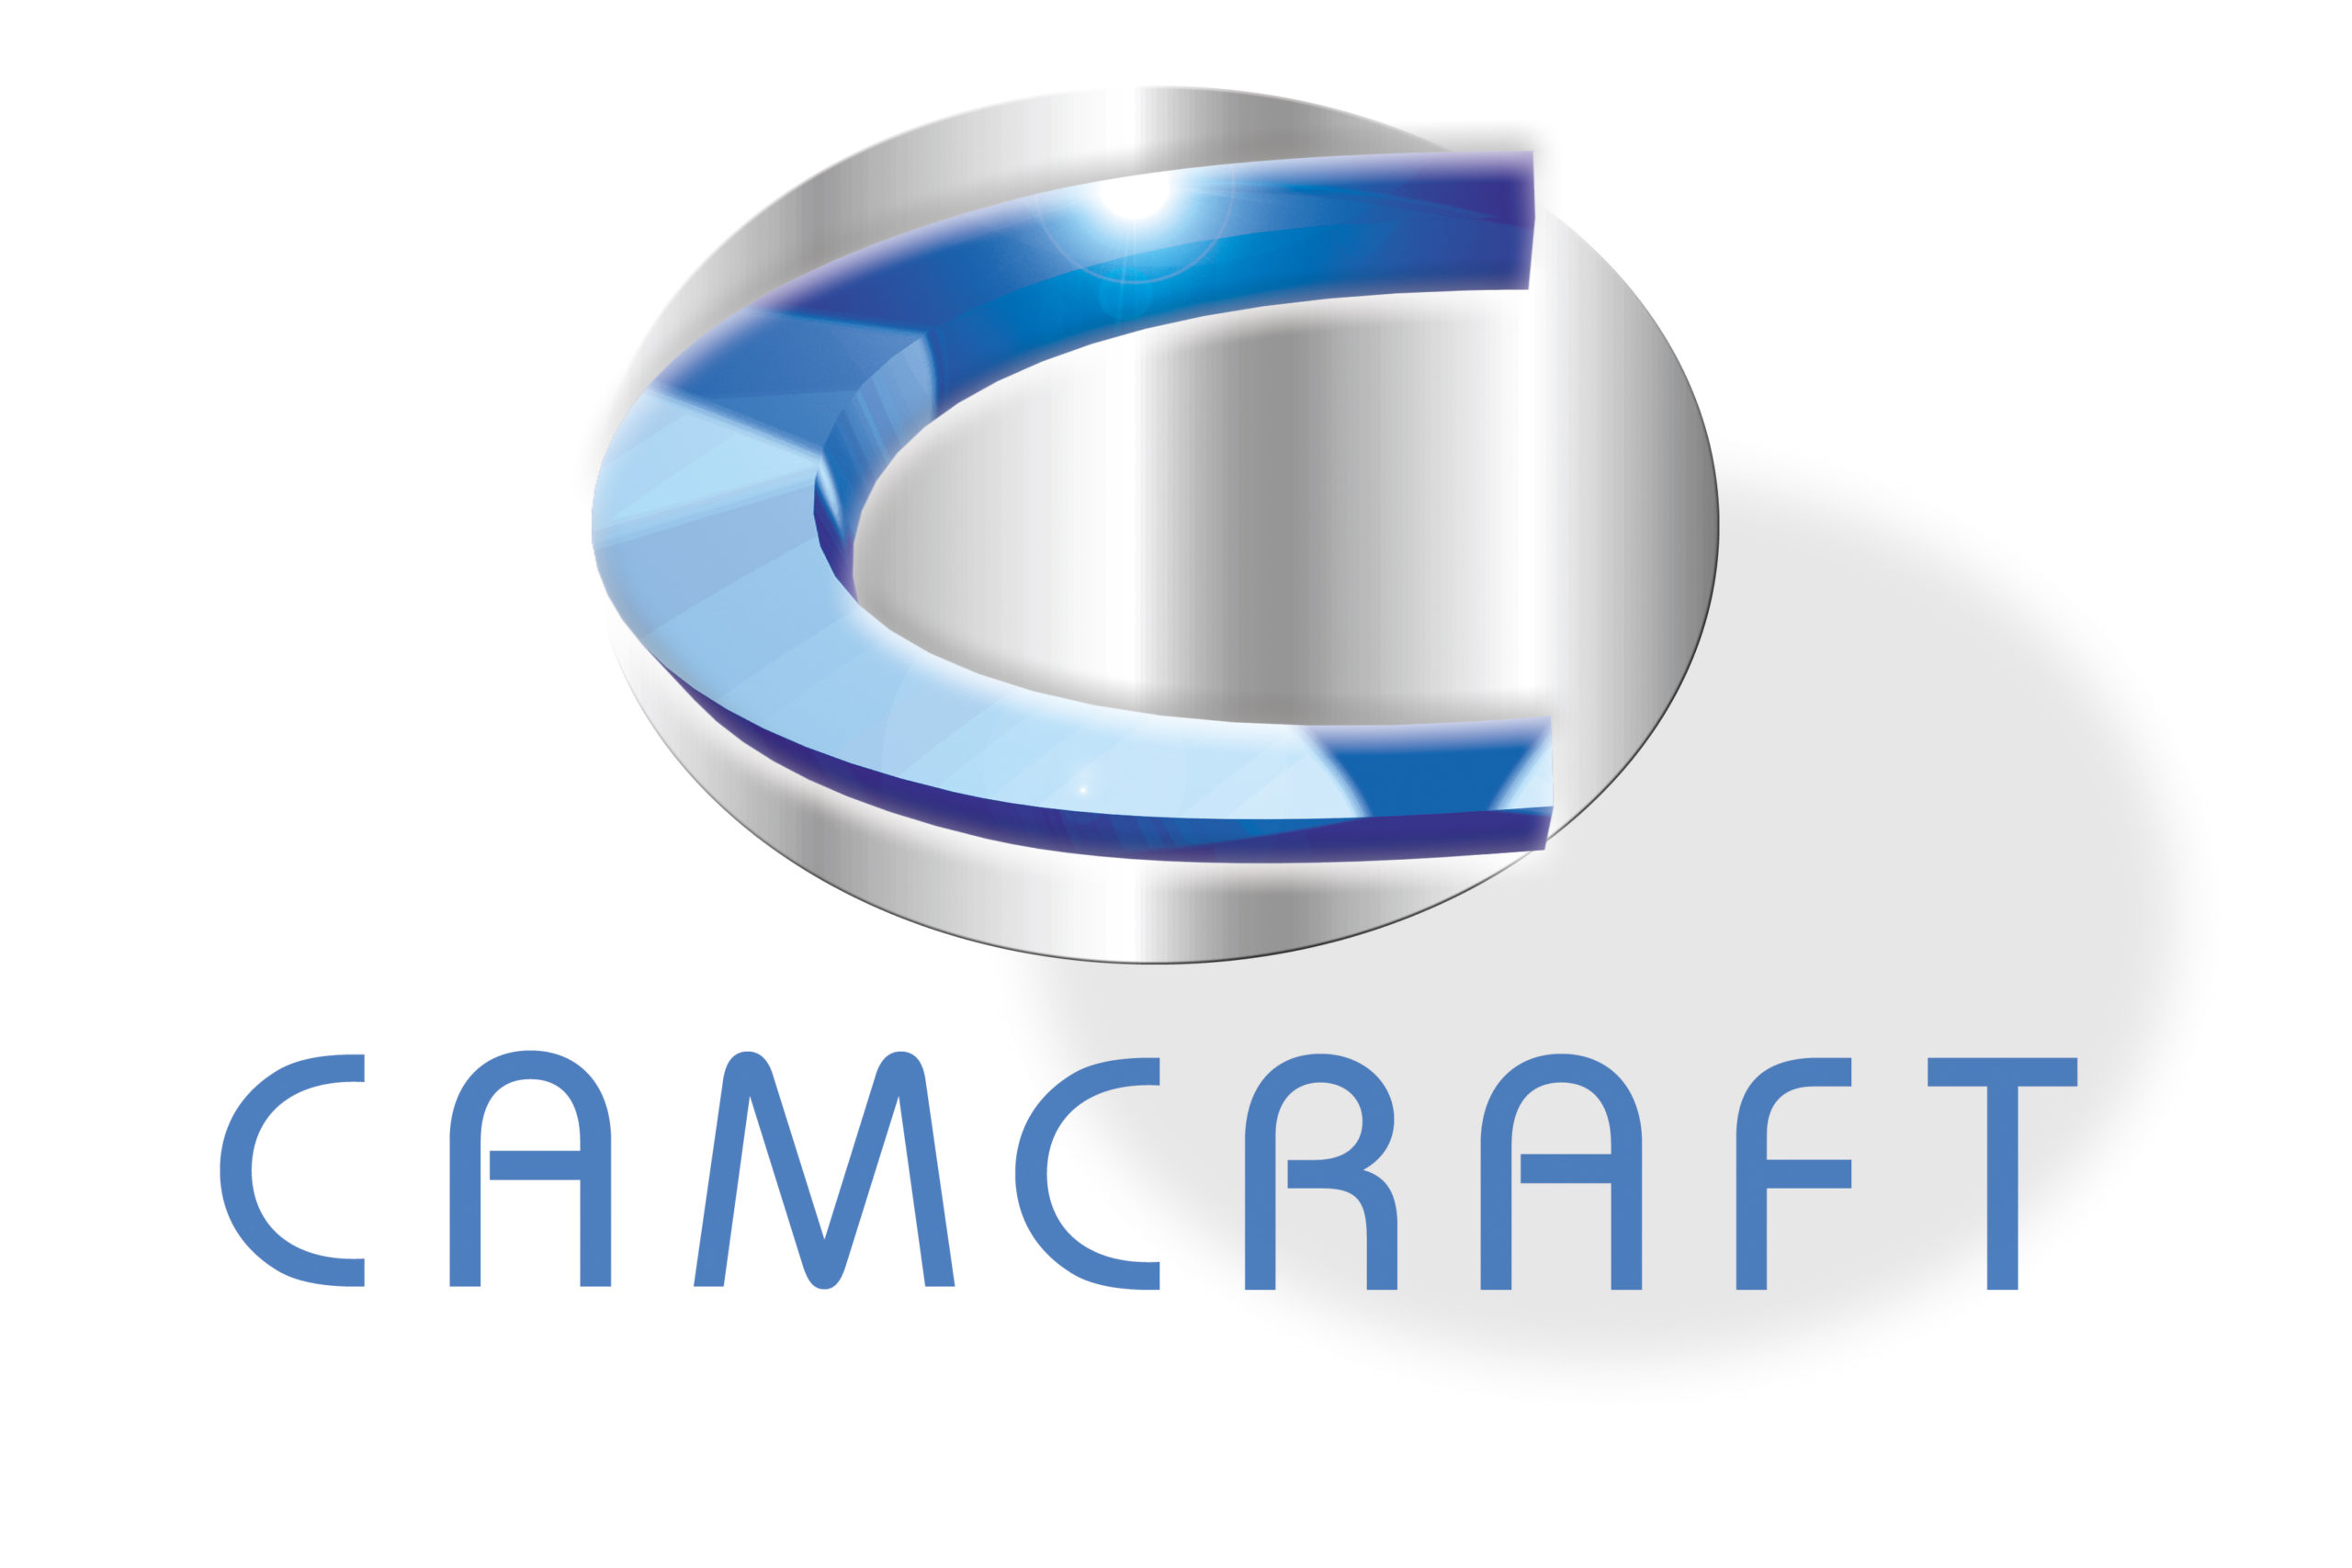 Camcraft Ltd